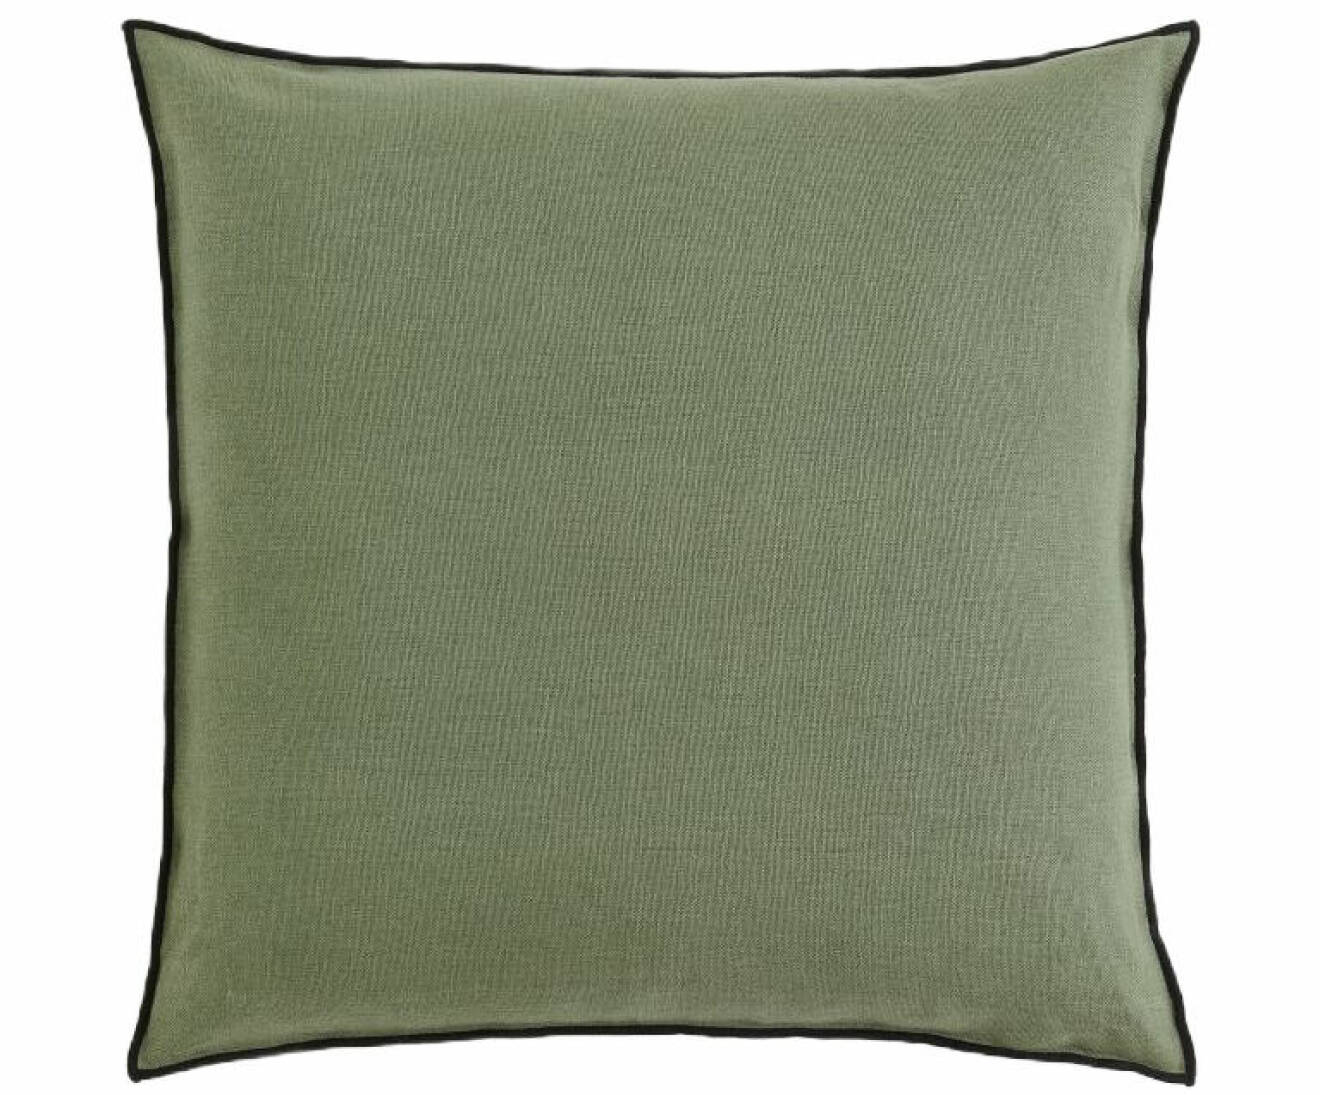 grön kudde i linne från hm